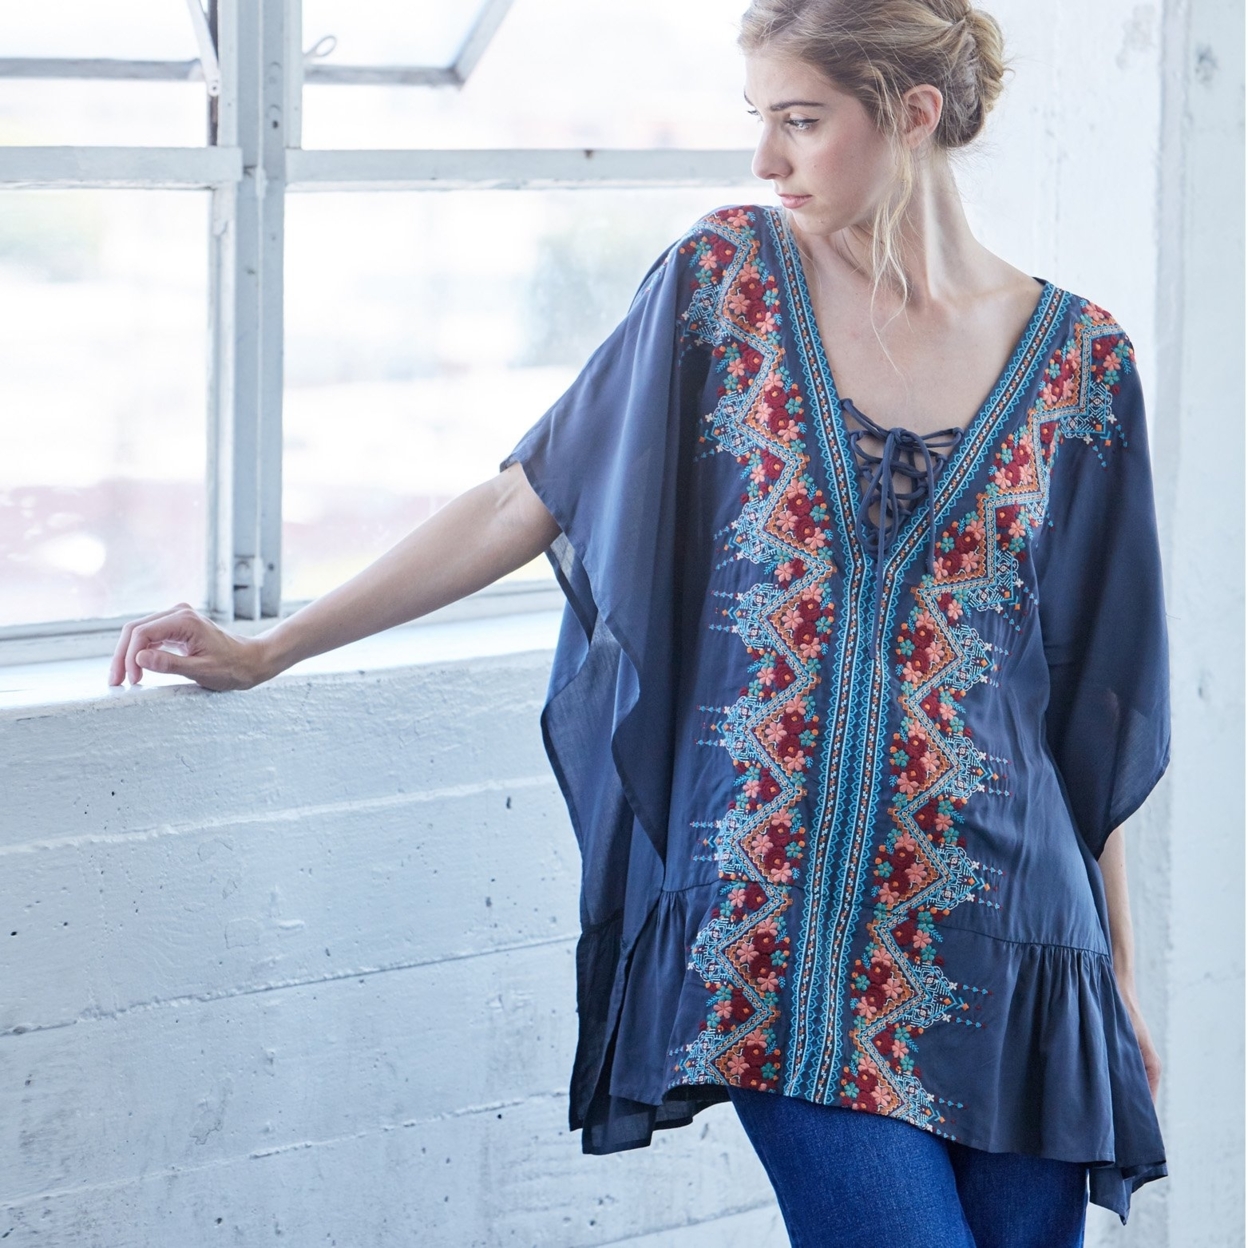 Florid Embroidery Kimono Top - Blue, Small (2-6)